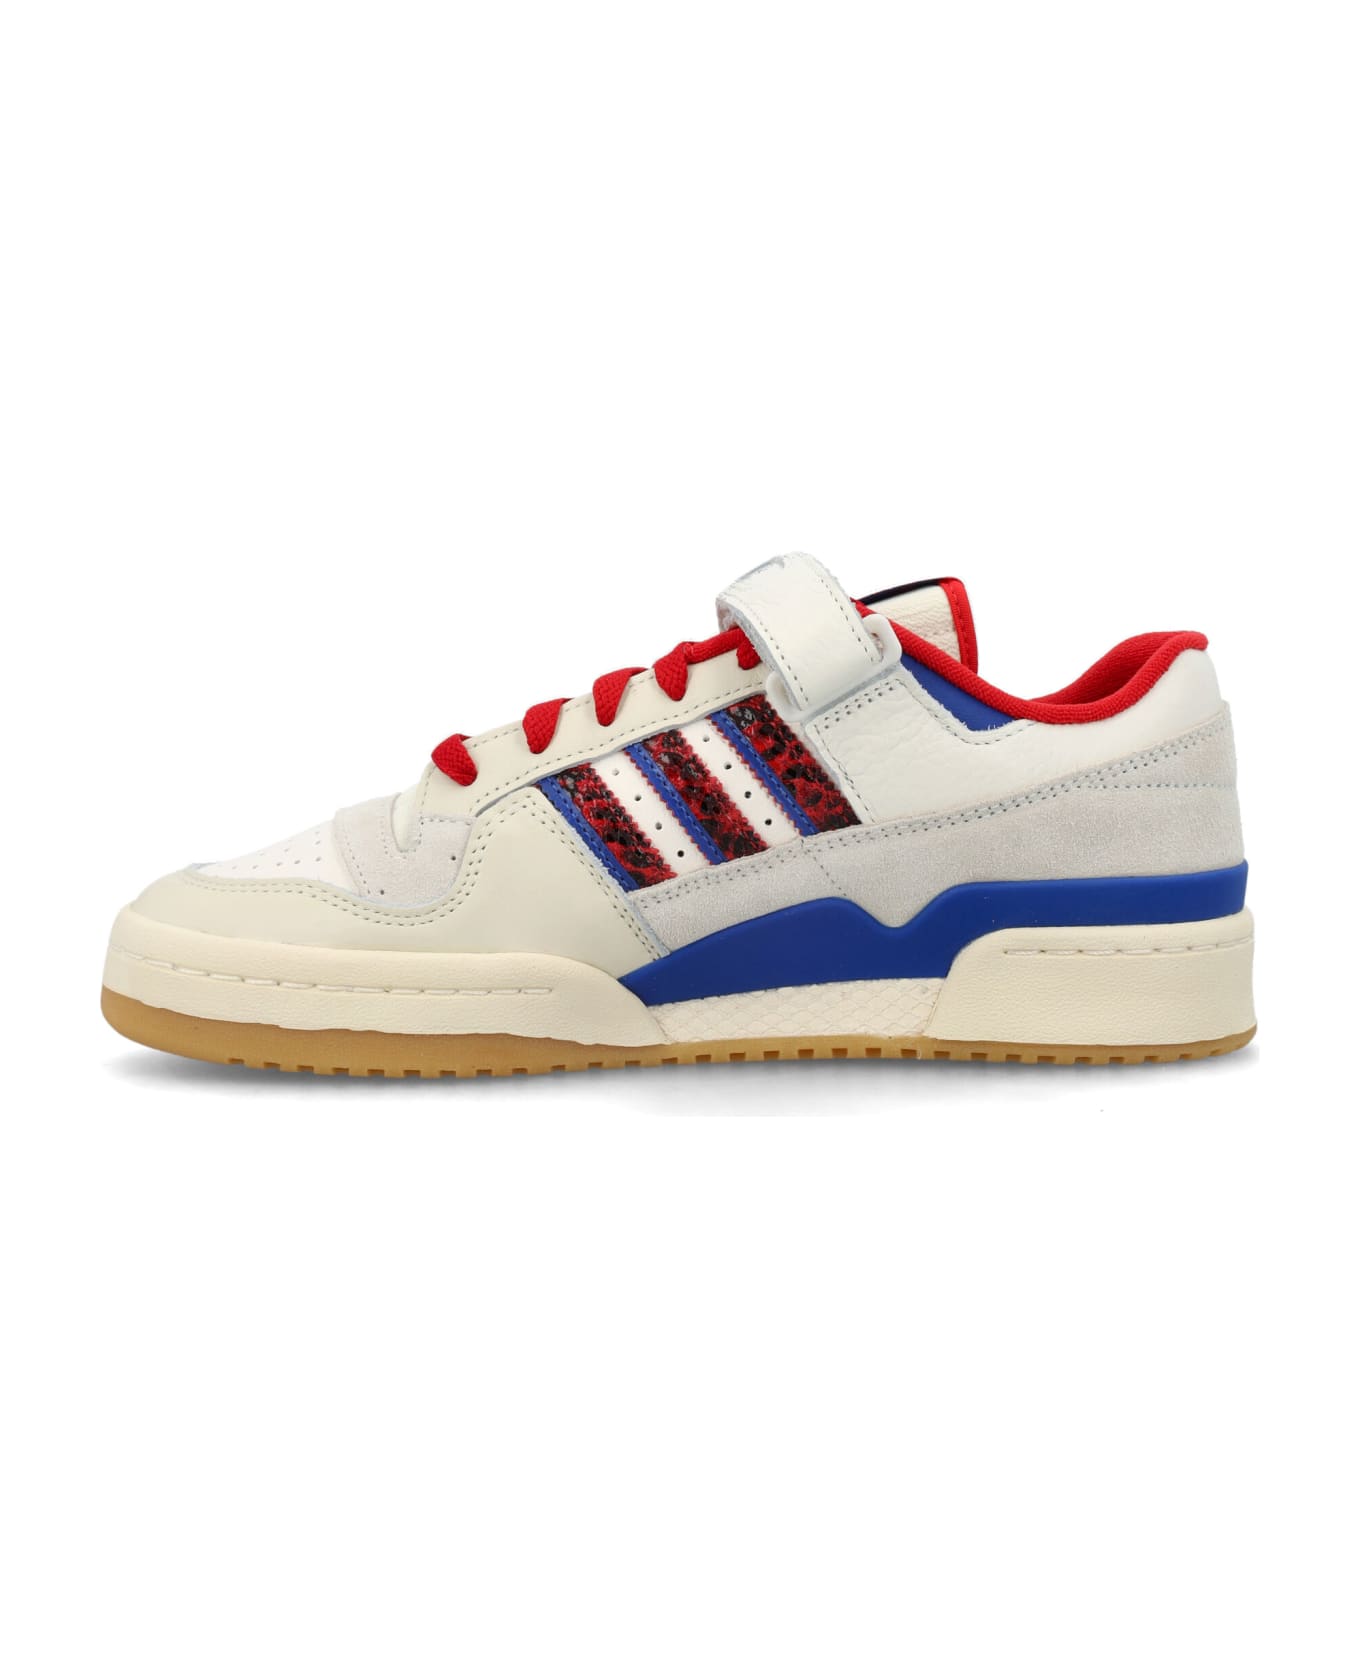 Adidas Originals Forum 84 Low Shoes - WHITE RED